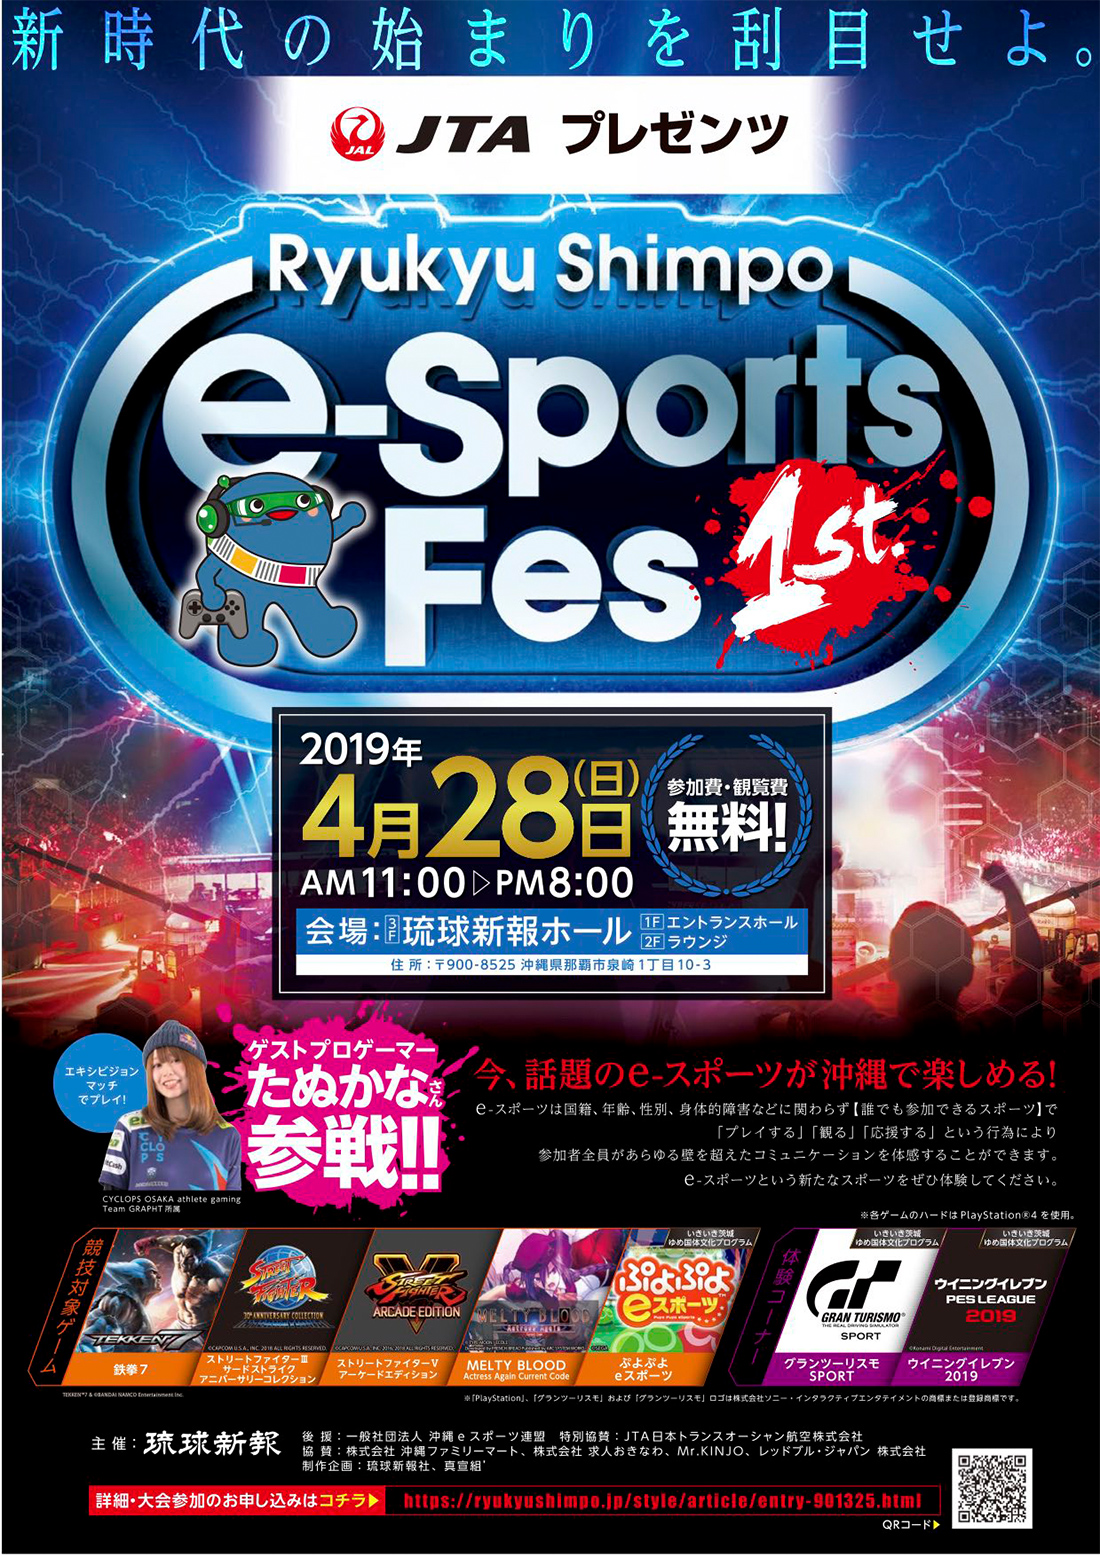 JATプレゼンツ Ryukyu Shimpo e-Sports Fes 1st ポスター